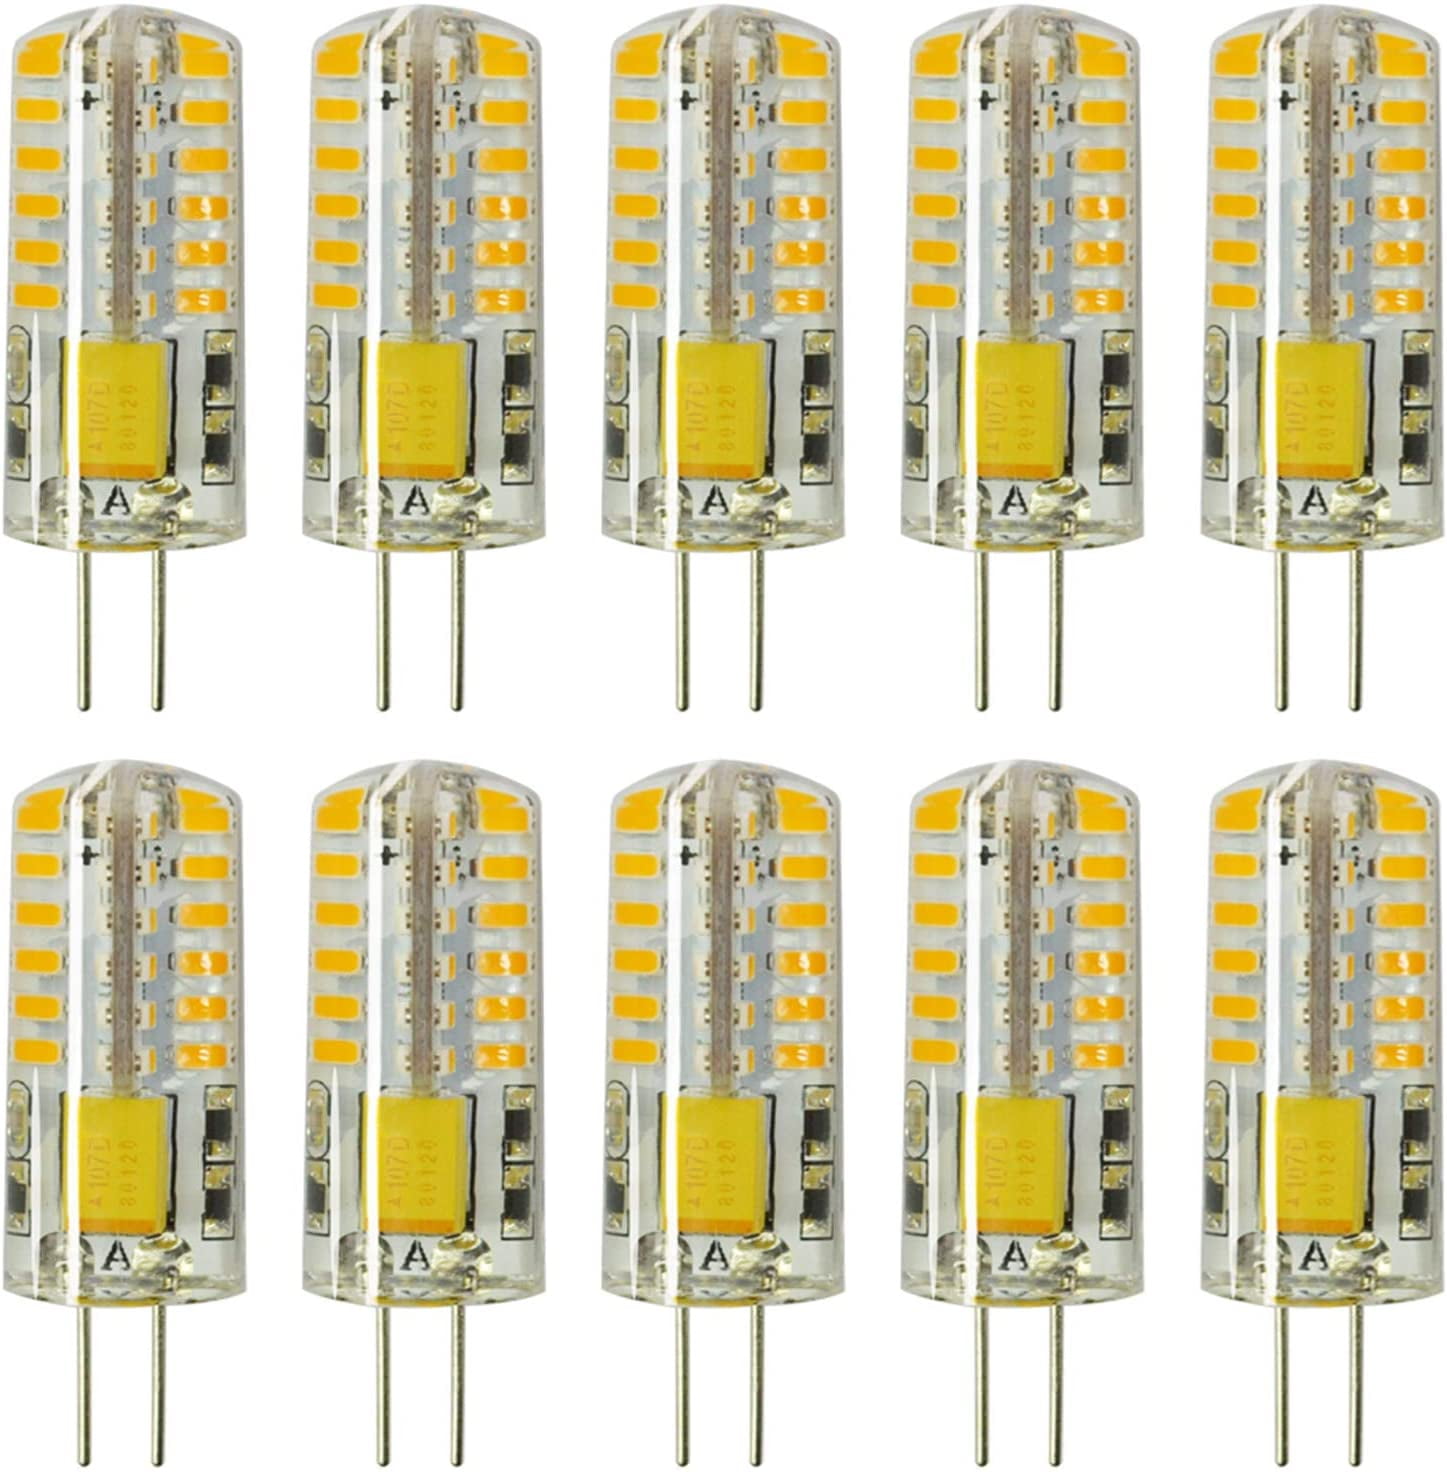 10pcs G4 LED Bulbs Bi-Pin Base Light Bulbs 3W AC/DC T3 Halogen Bulb Replacement Landscape Bulbs(Warm White 3000K) - Walmart.com